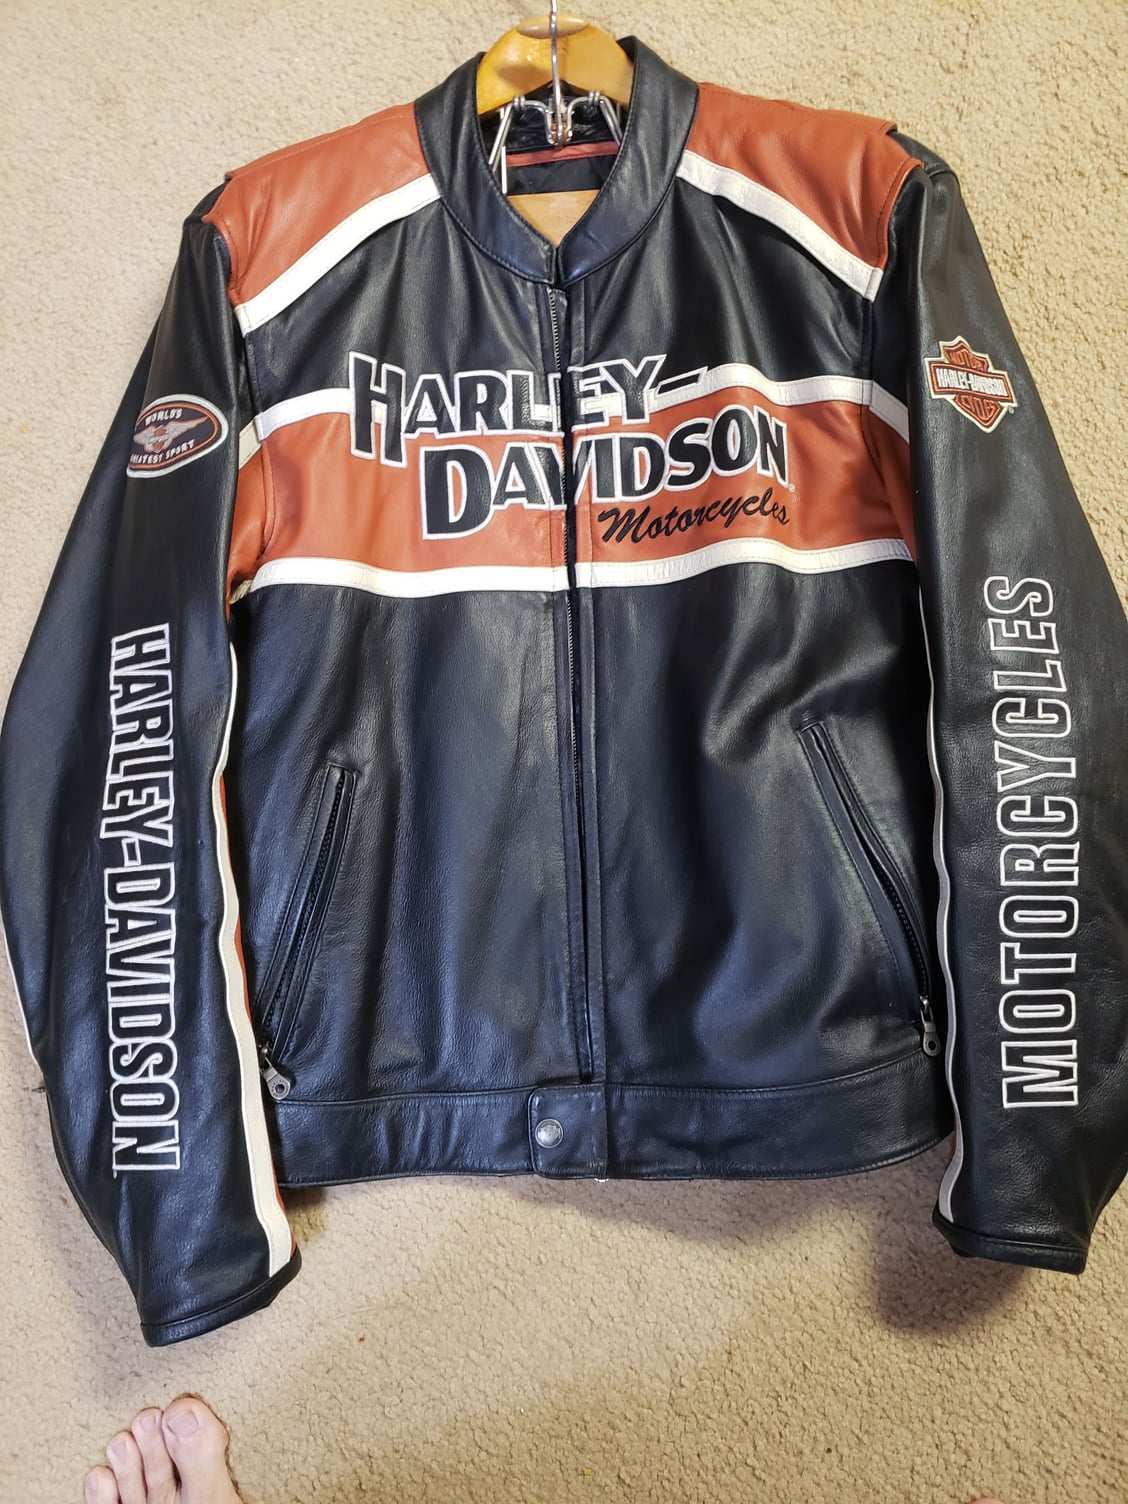 Great Looking Harley-Davidson Jacket XL - Harley Davidson Forums